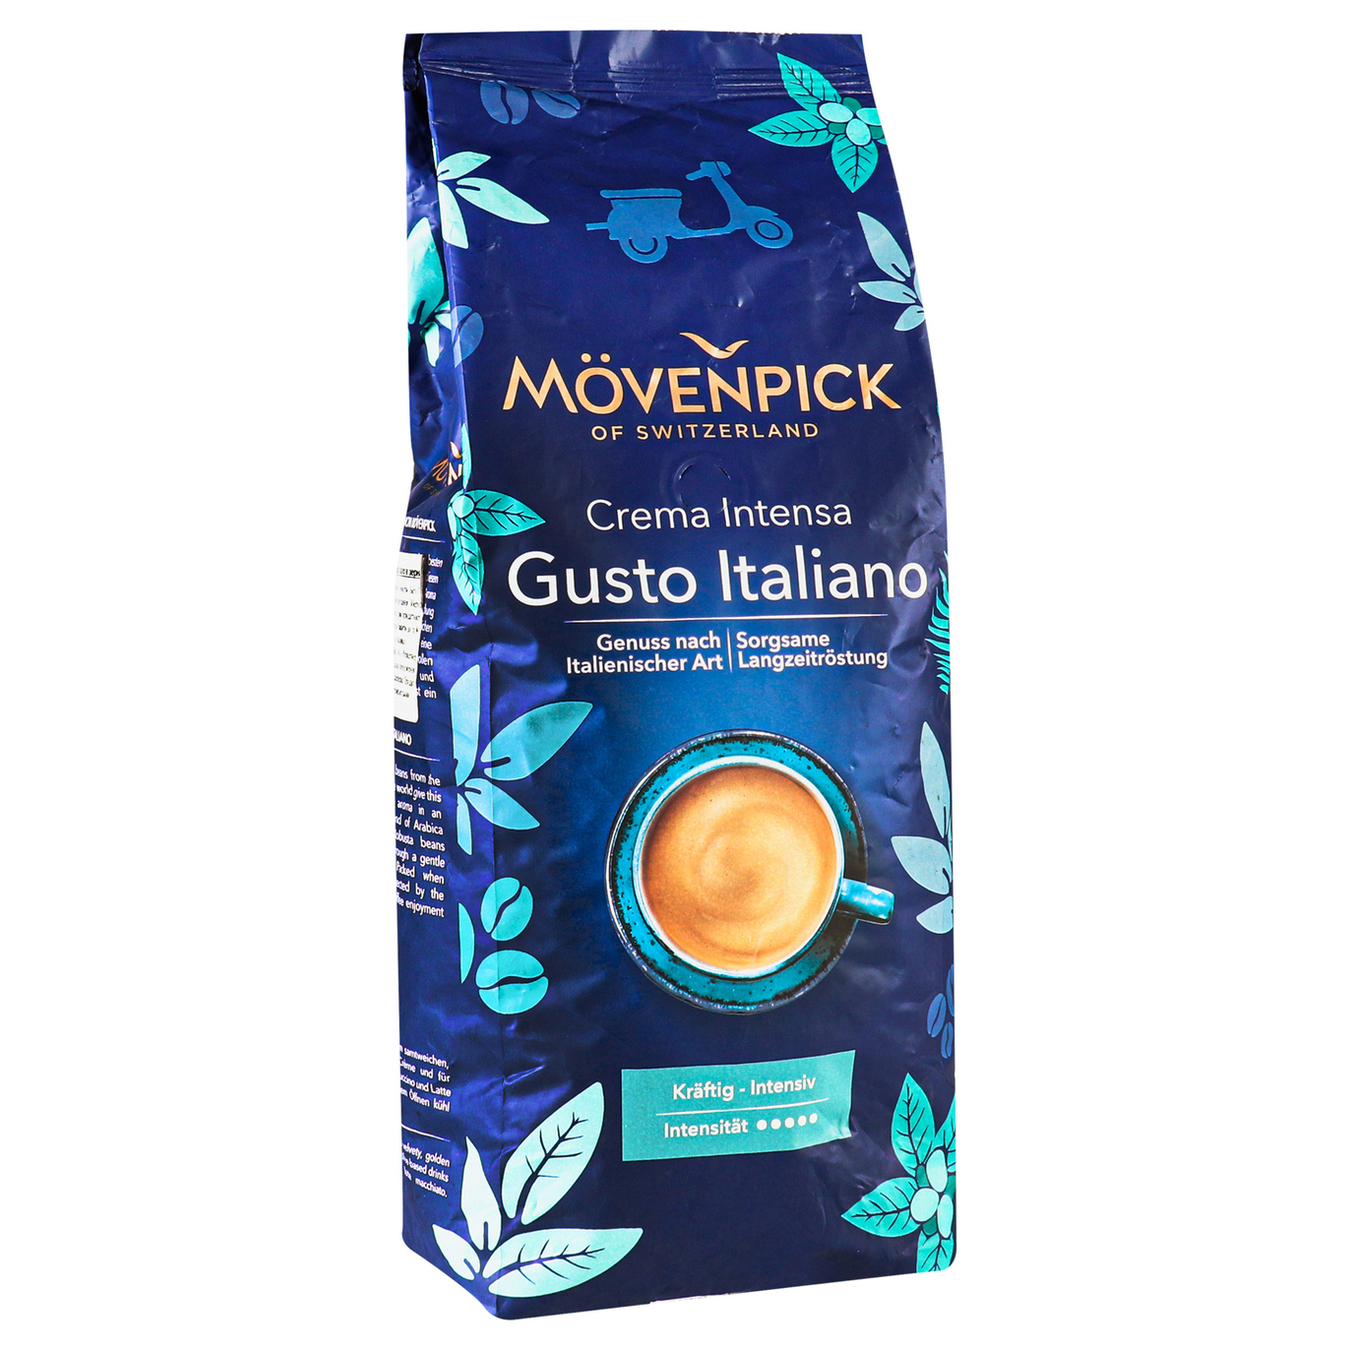 Movenpick Gusto Italiano Coffee Beans 1kg 2